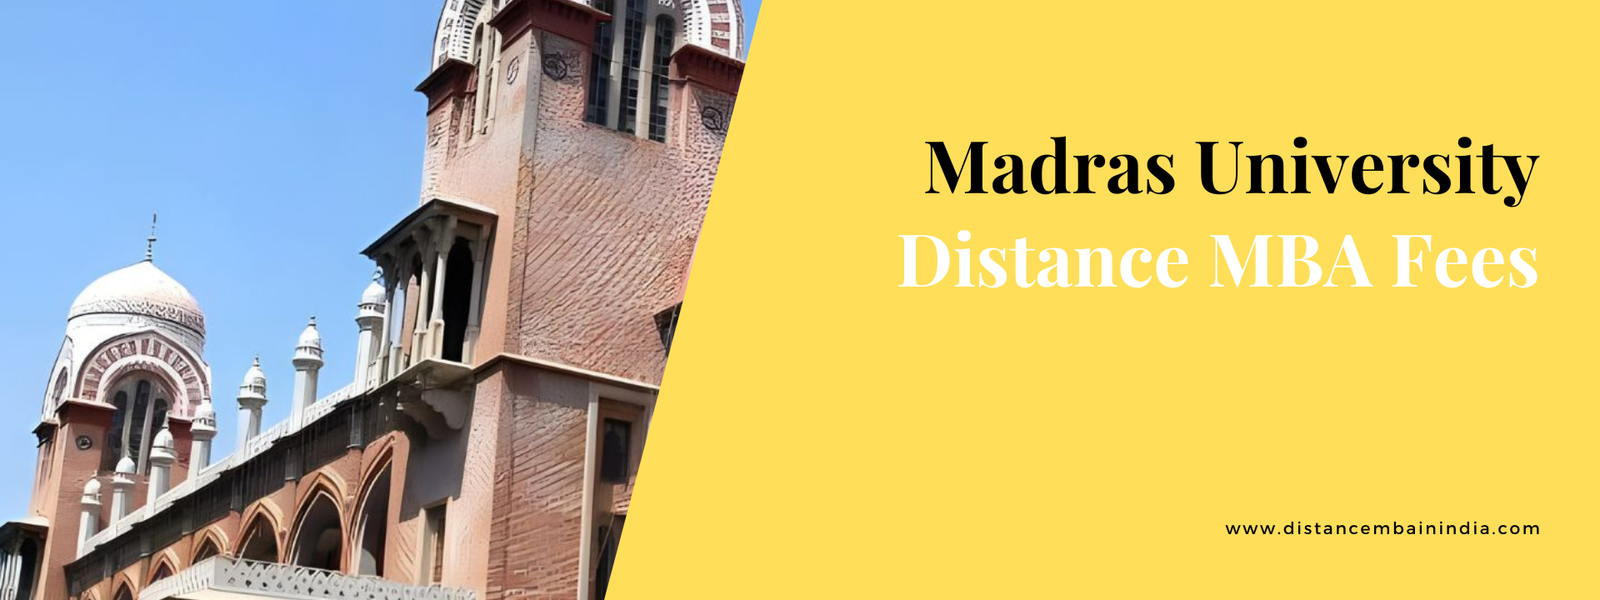 Madras University Distance MBA Fees